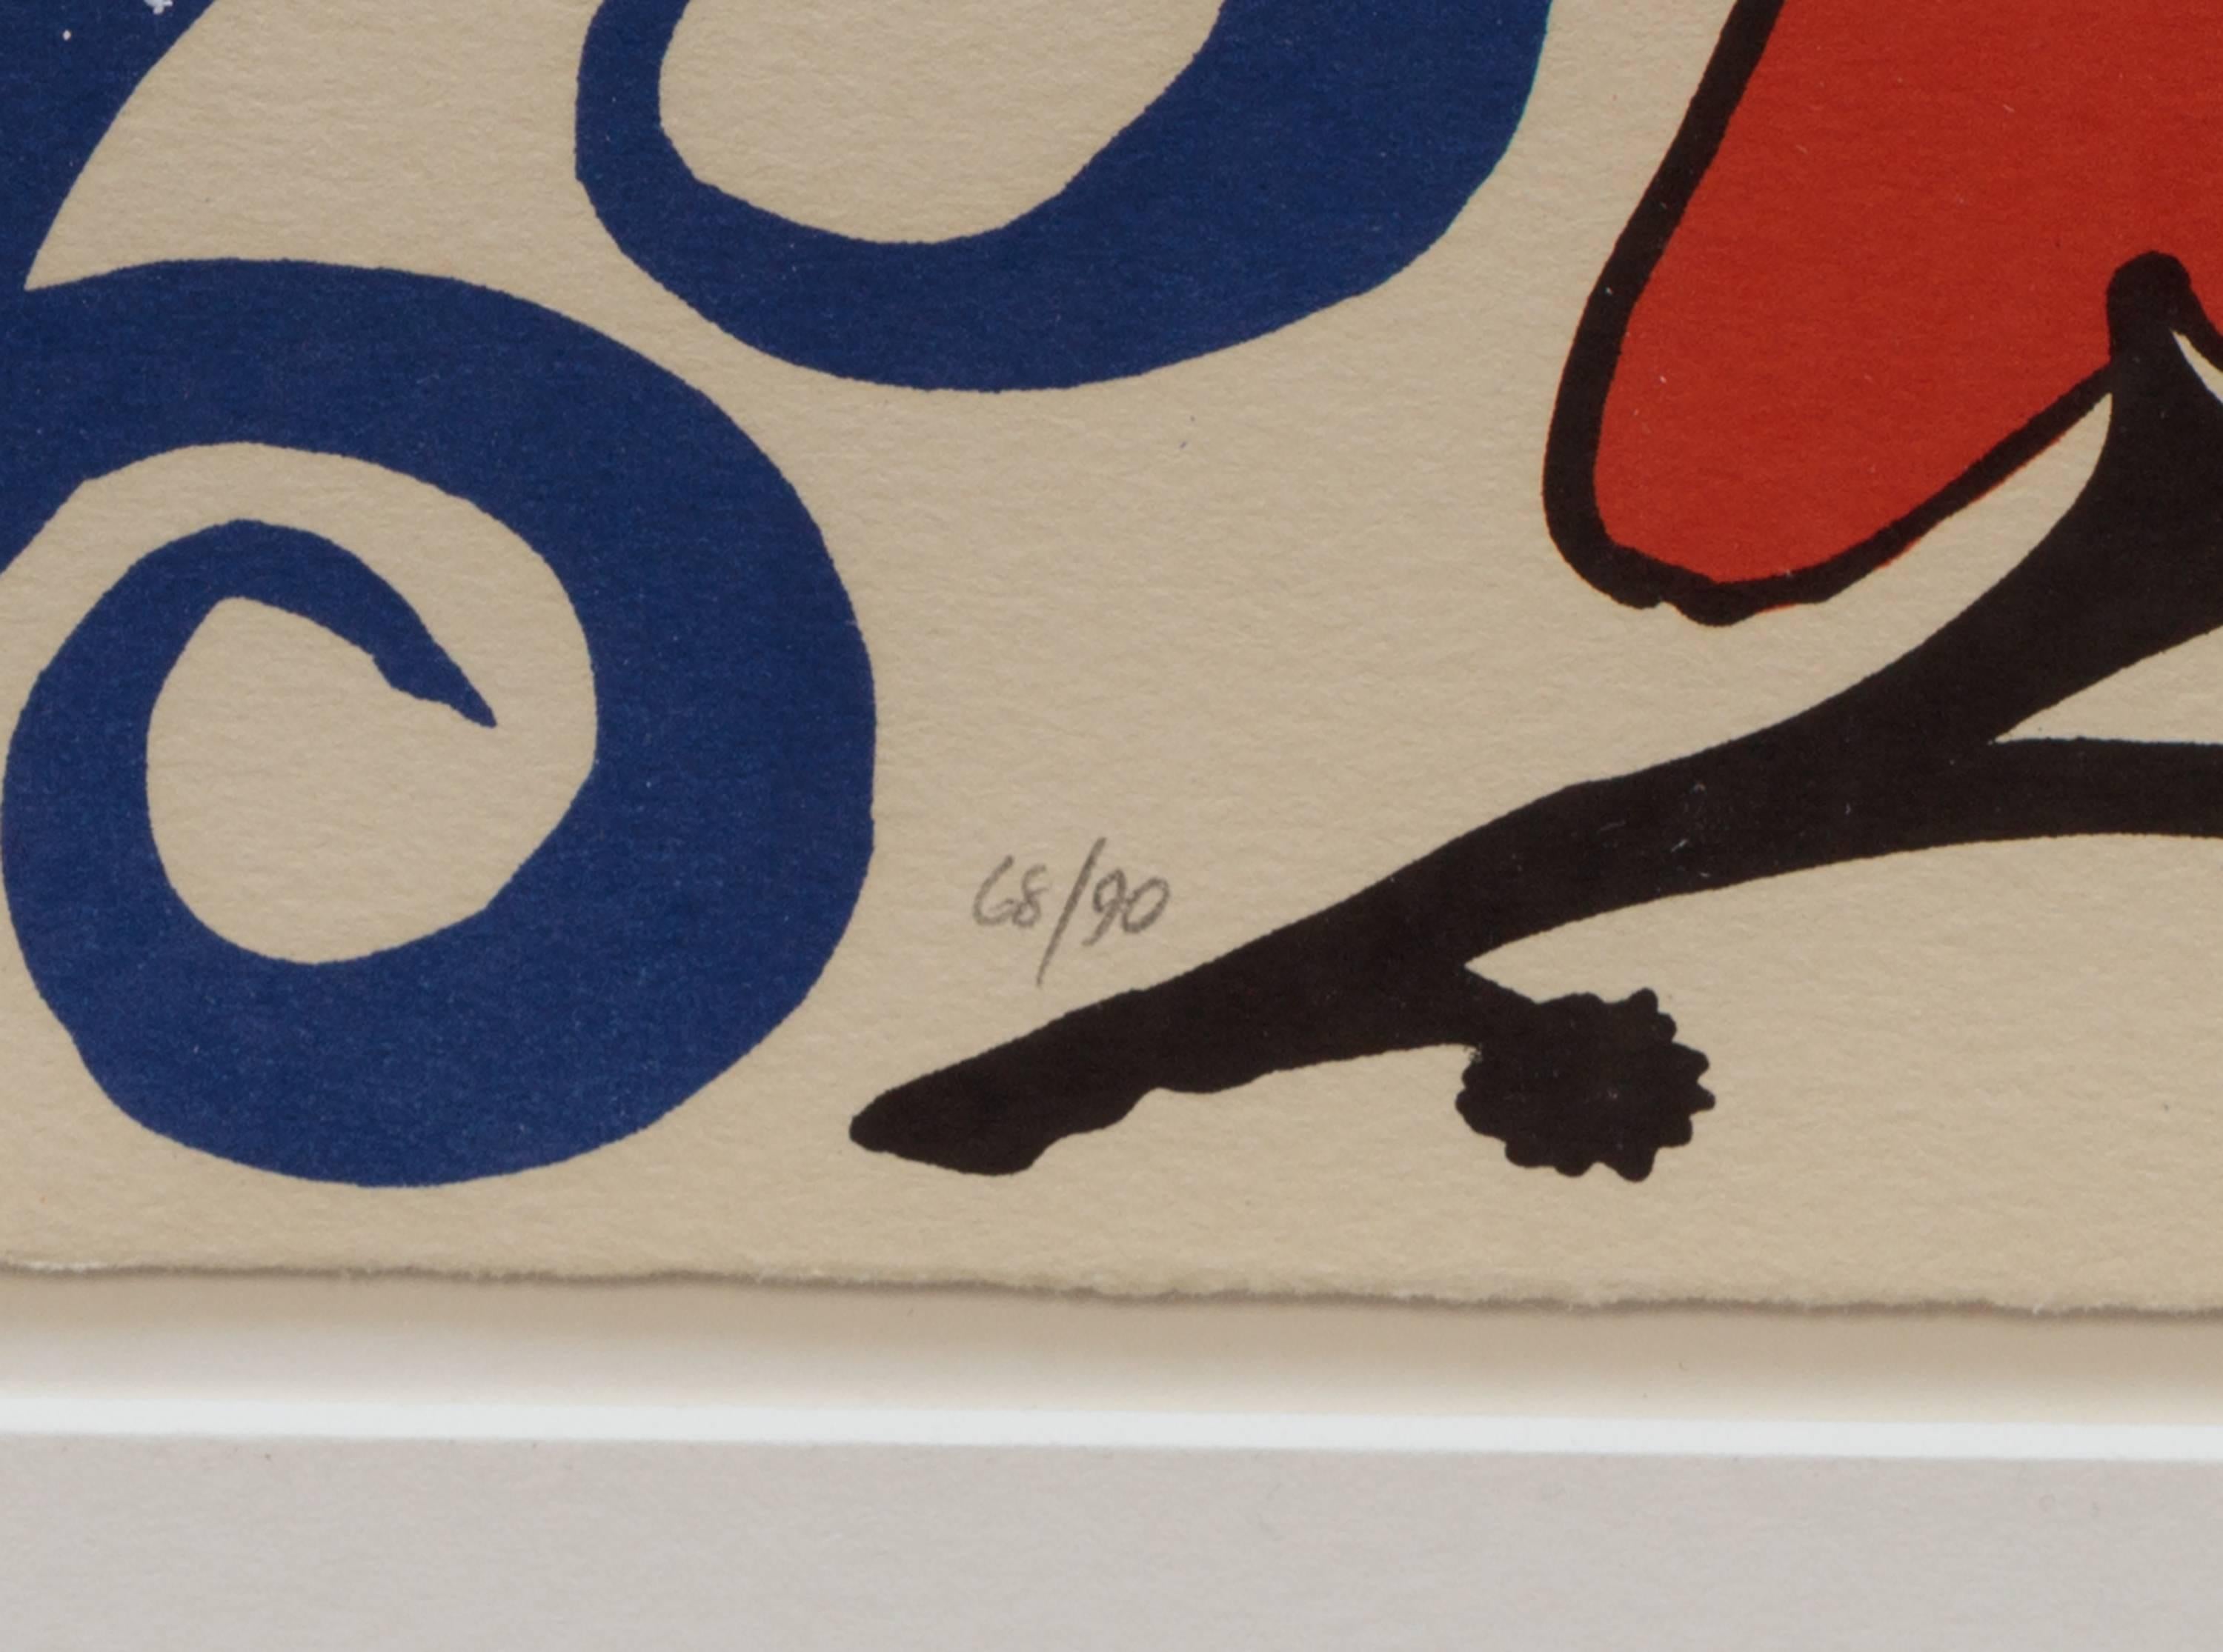 Les Fleurs - Untitled (Spades, Hearts, Diamonds, Clubs) - Print by Alexander Calder